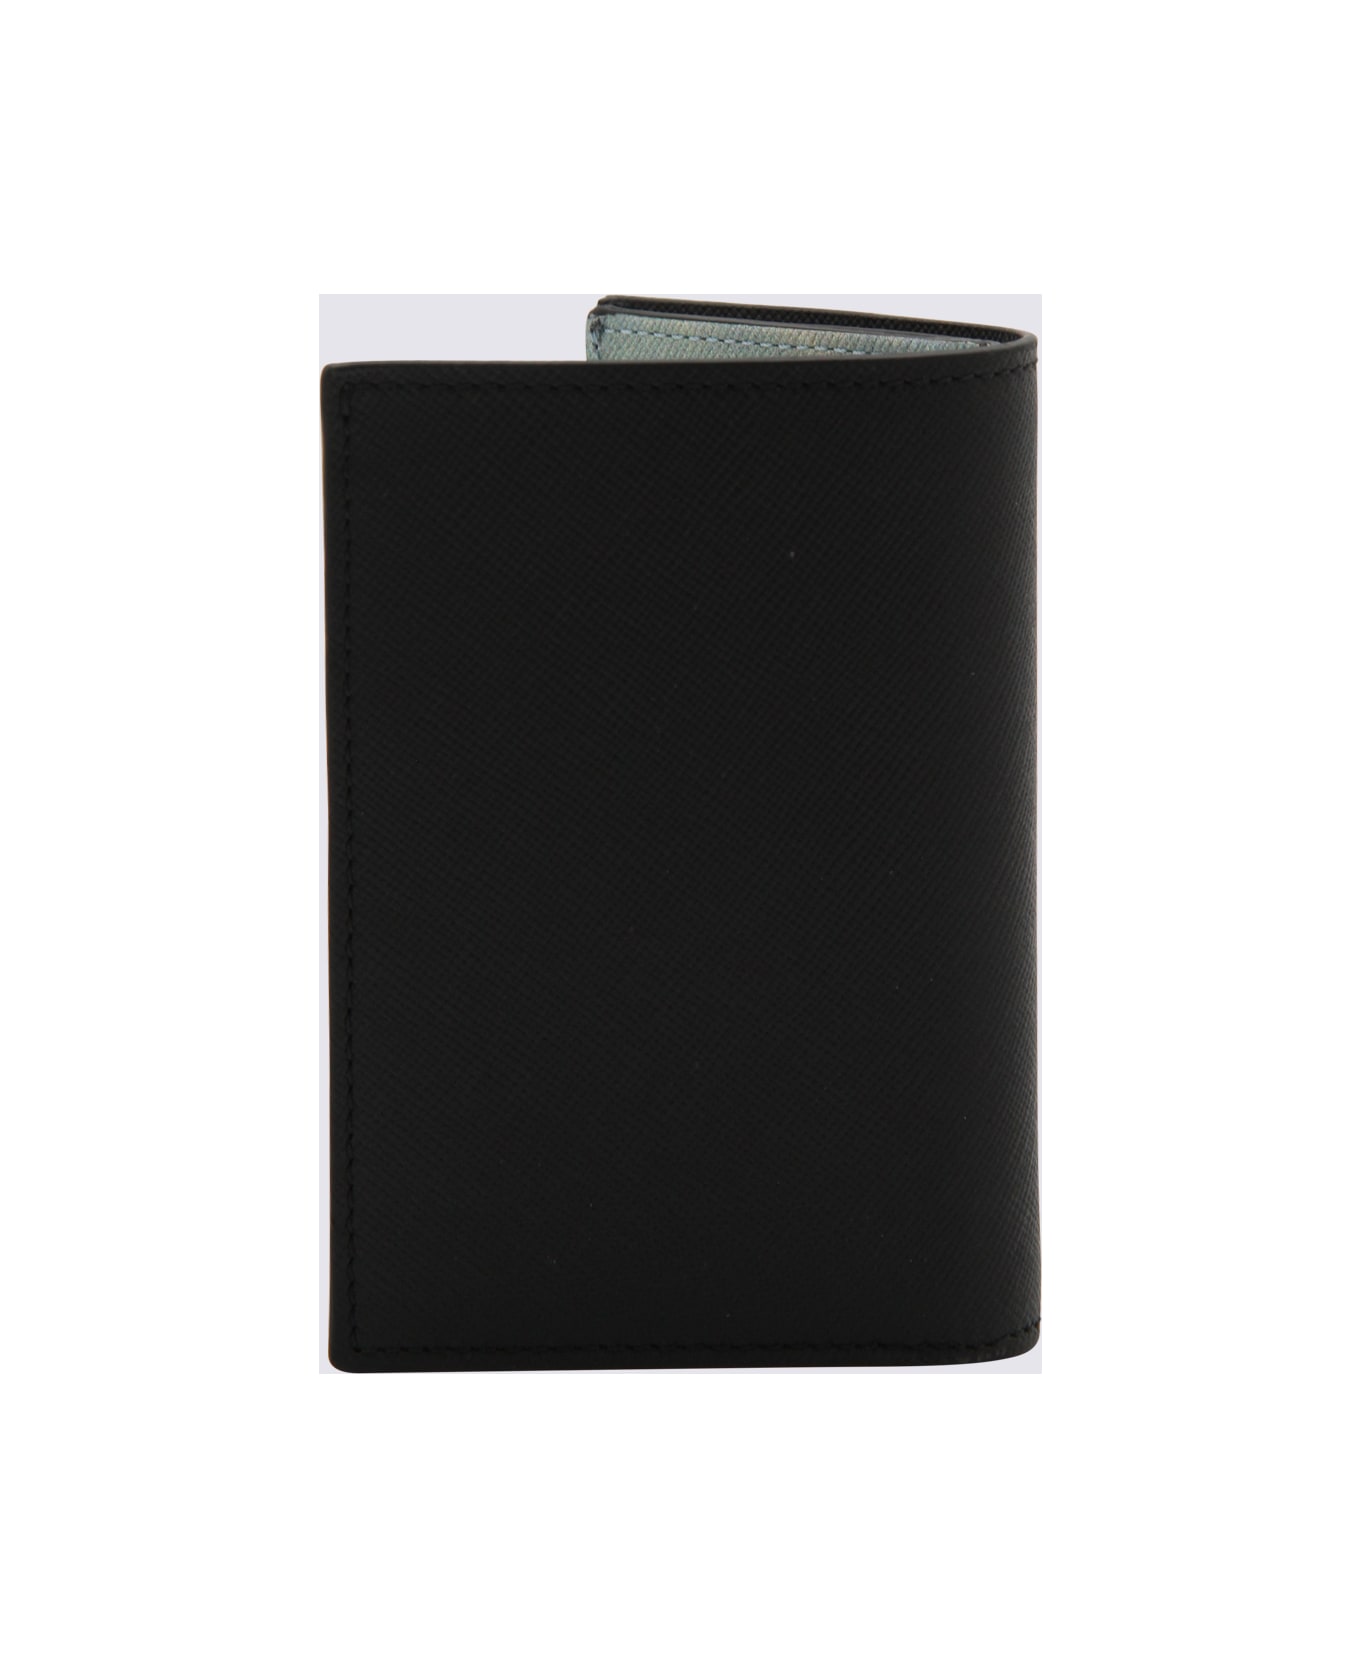 Paul Smith Black Multicolour Leather Cardholder - Black